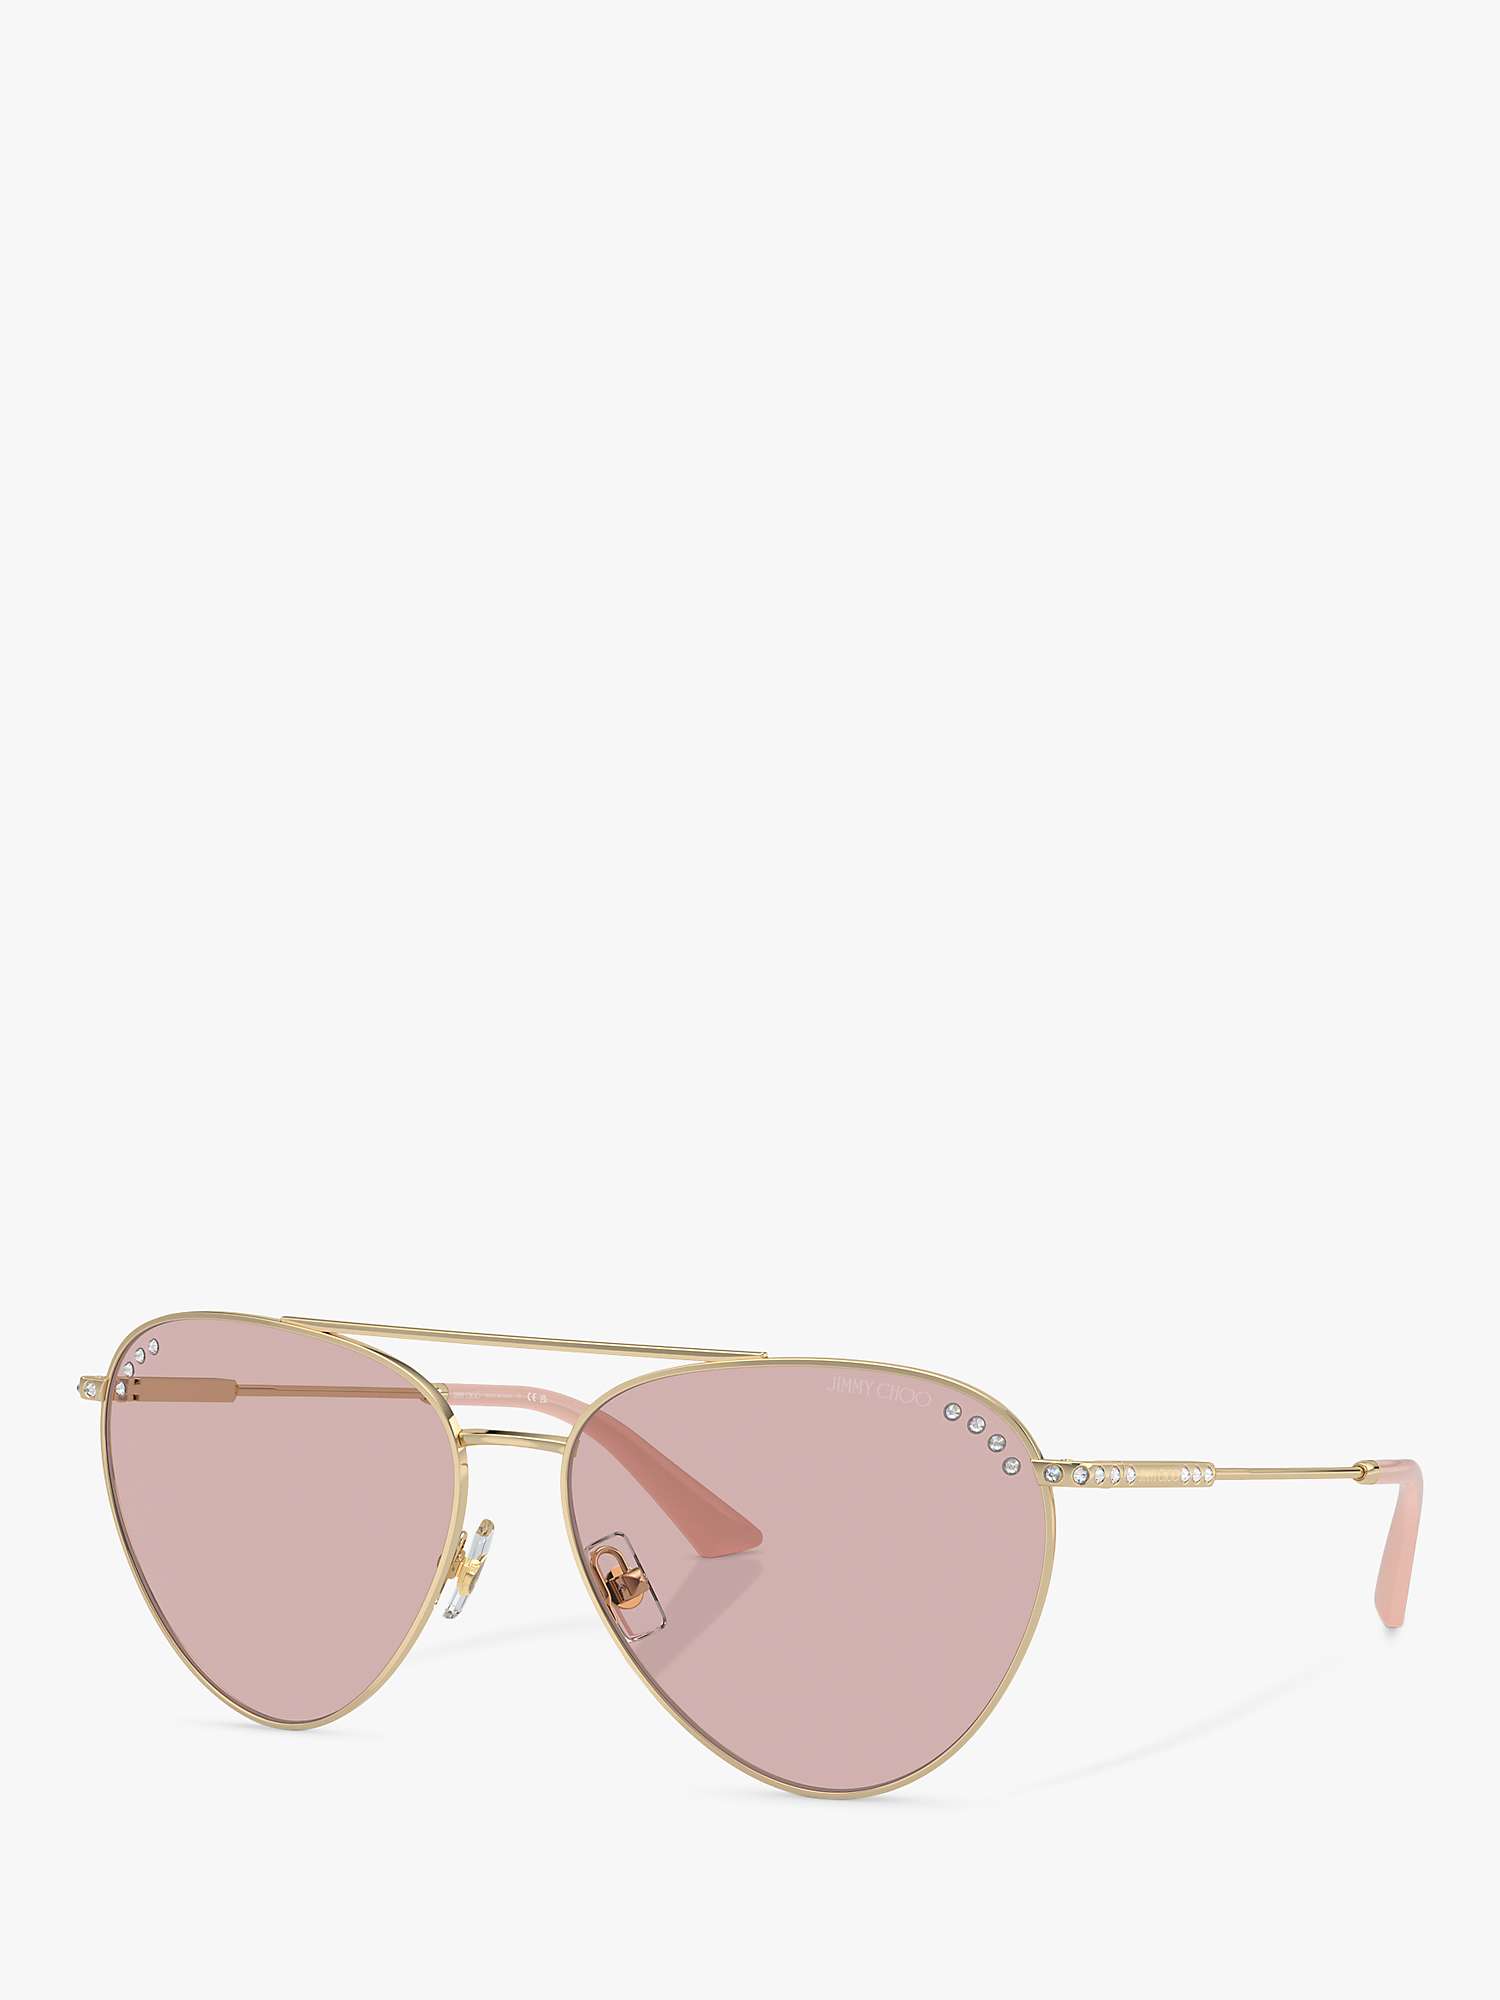 Buy Jimmy Choo JC4002B Women's Aviator Sunglasses, Pale Gold/Pink Online at johnlewis.com